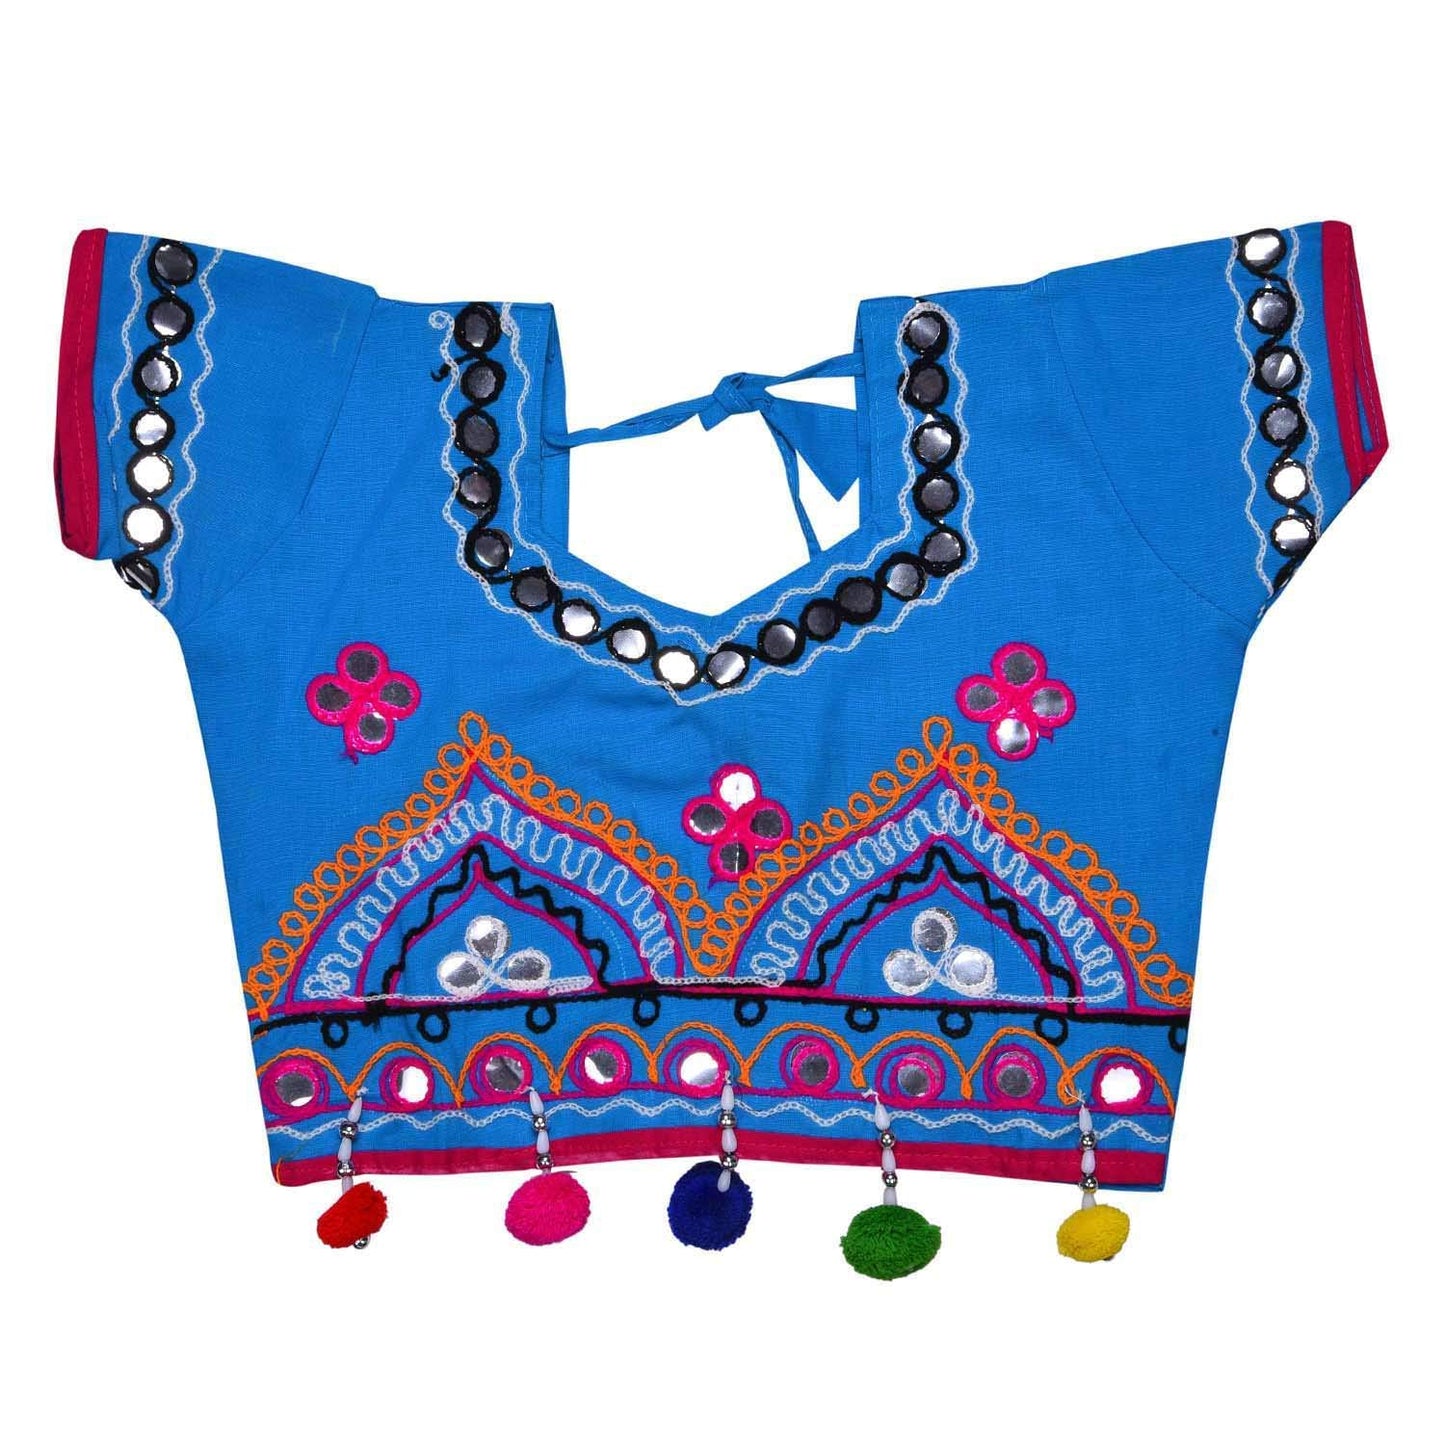 Girl's Cotton Ghaghra Choli, Leghnga Choli, Chania Choli 143blu -  Wish Karo Dresses